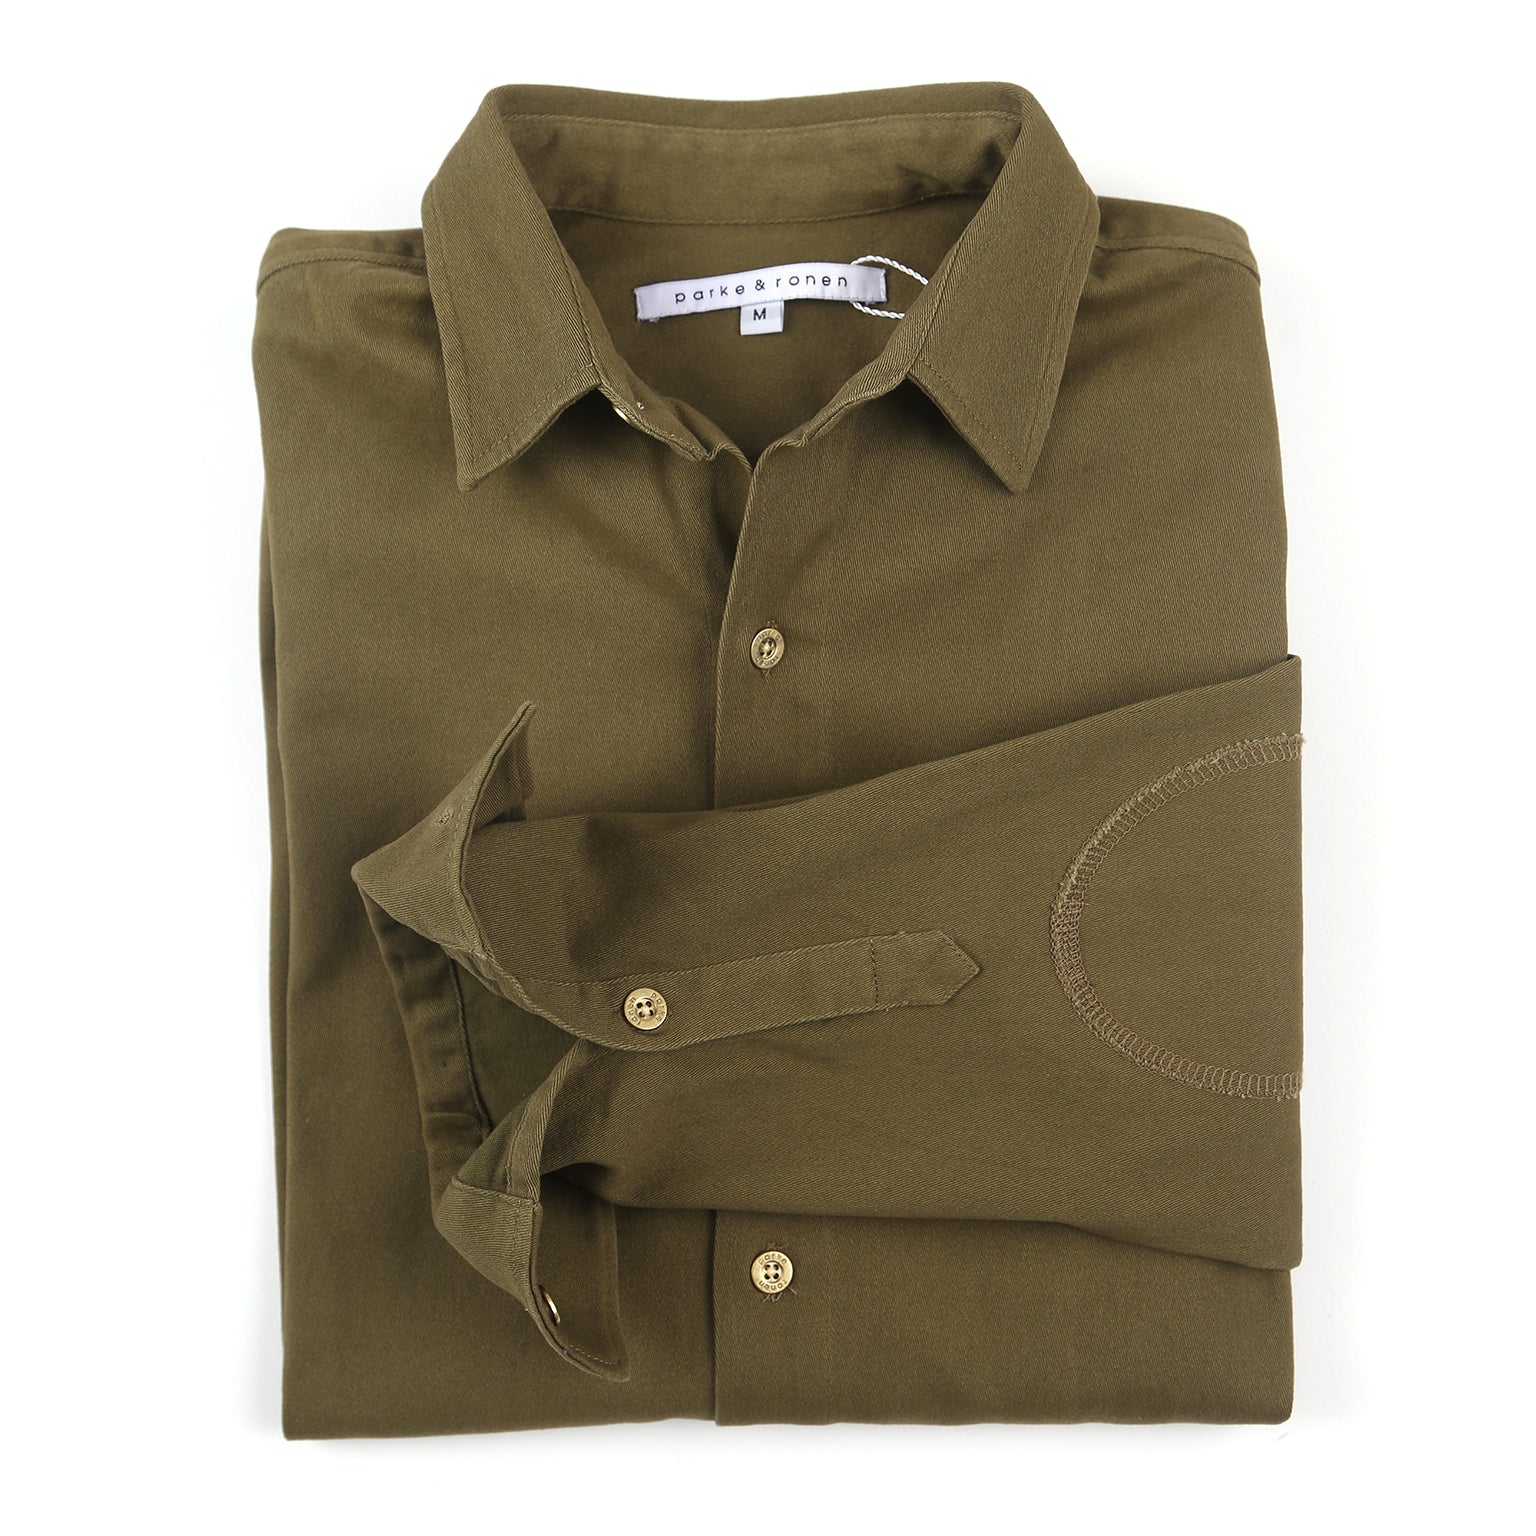 SAVE 70%- Vintage Washed Light Olive Stretch Twill Shirt